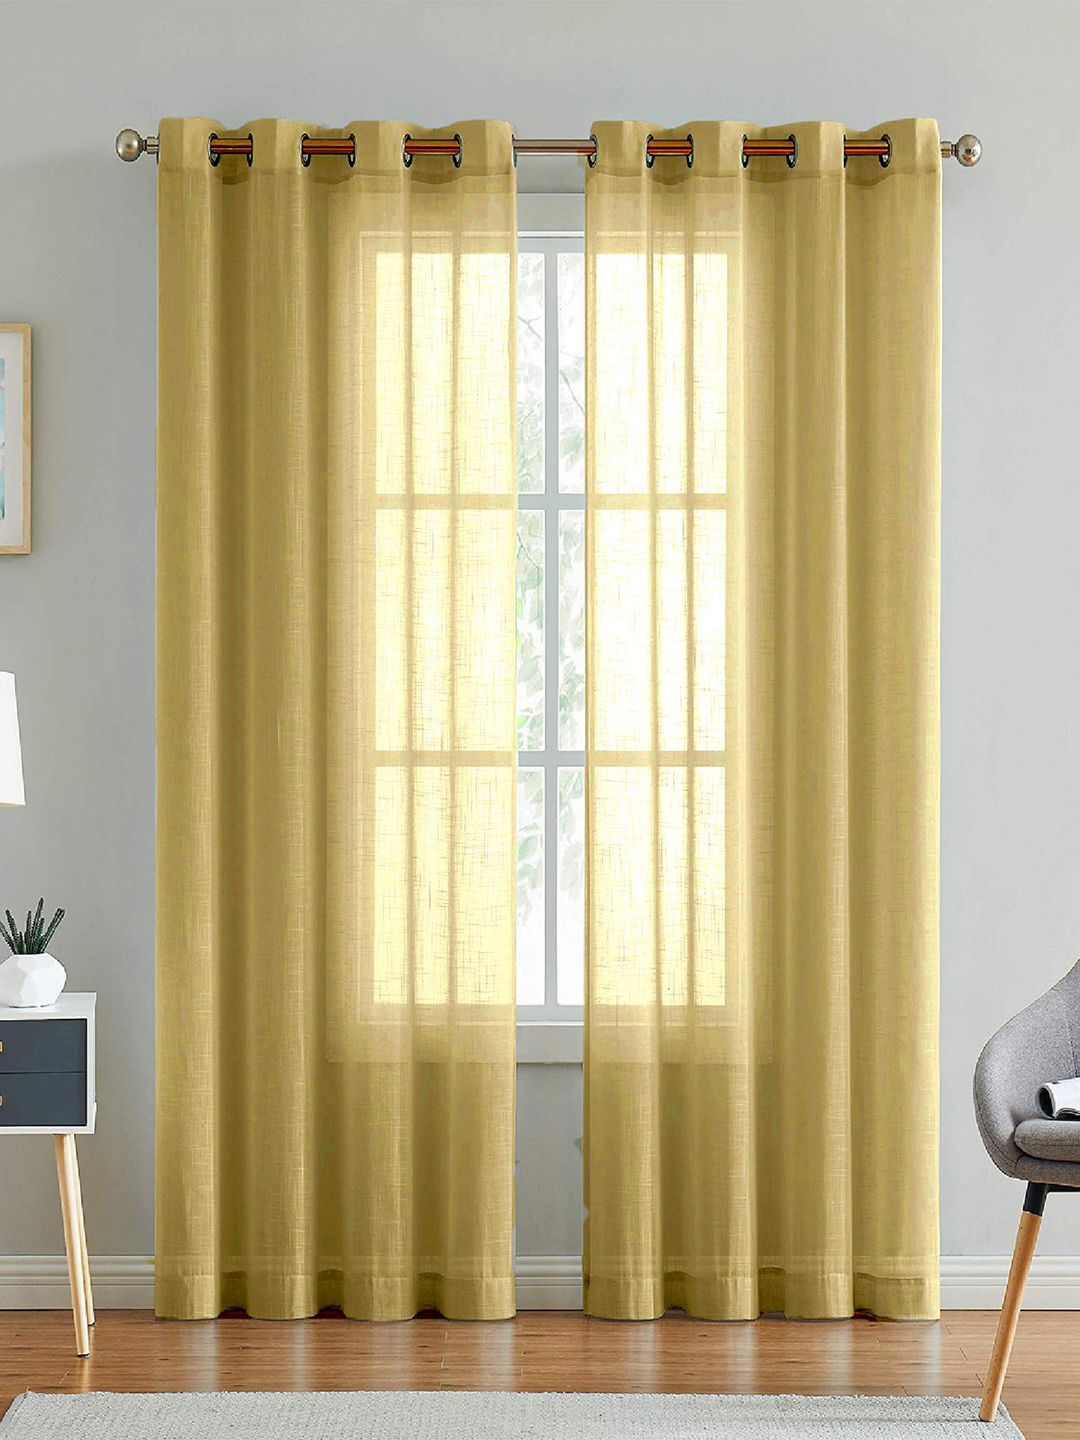 LINENWALAS Happy Sleeping Yellow & White Set of 2 Geometric CottonLinen Sheer Door Curtain Price in India